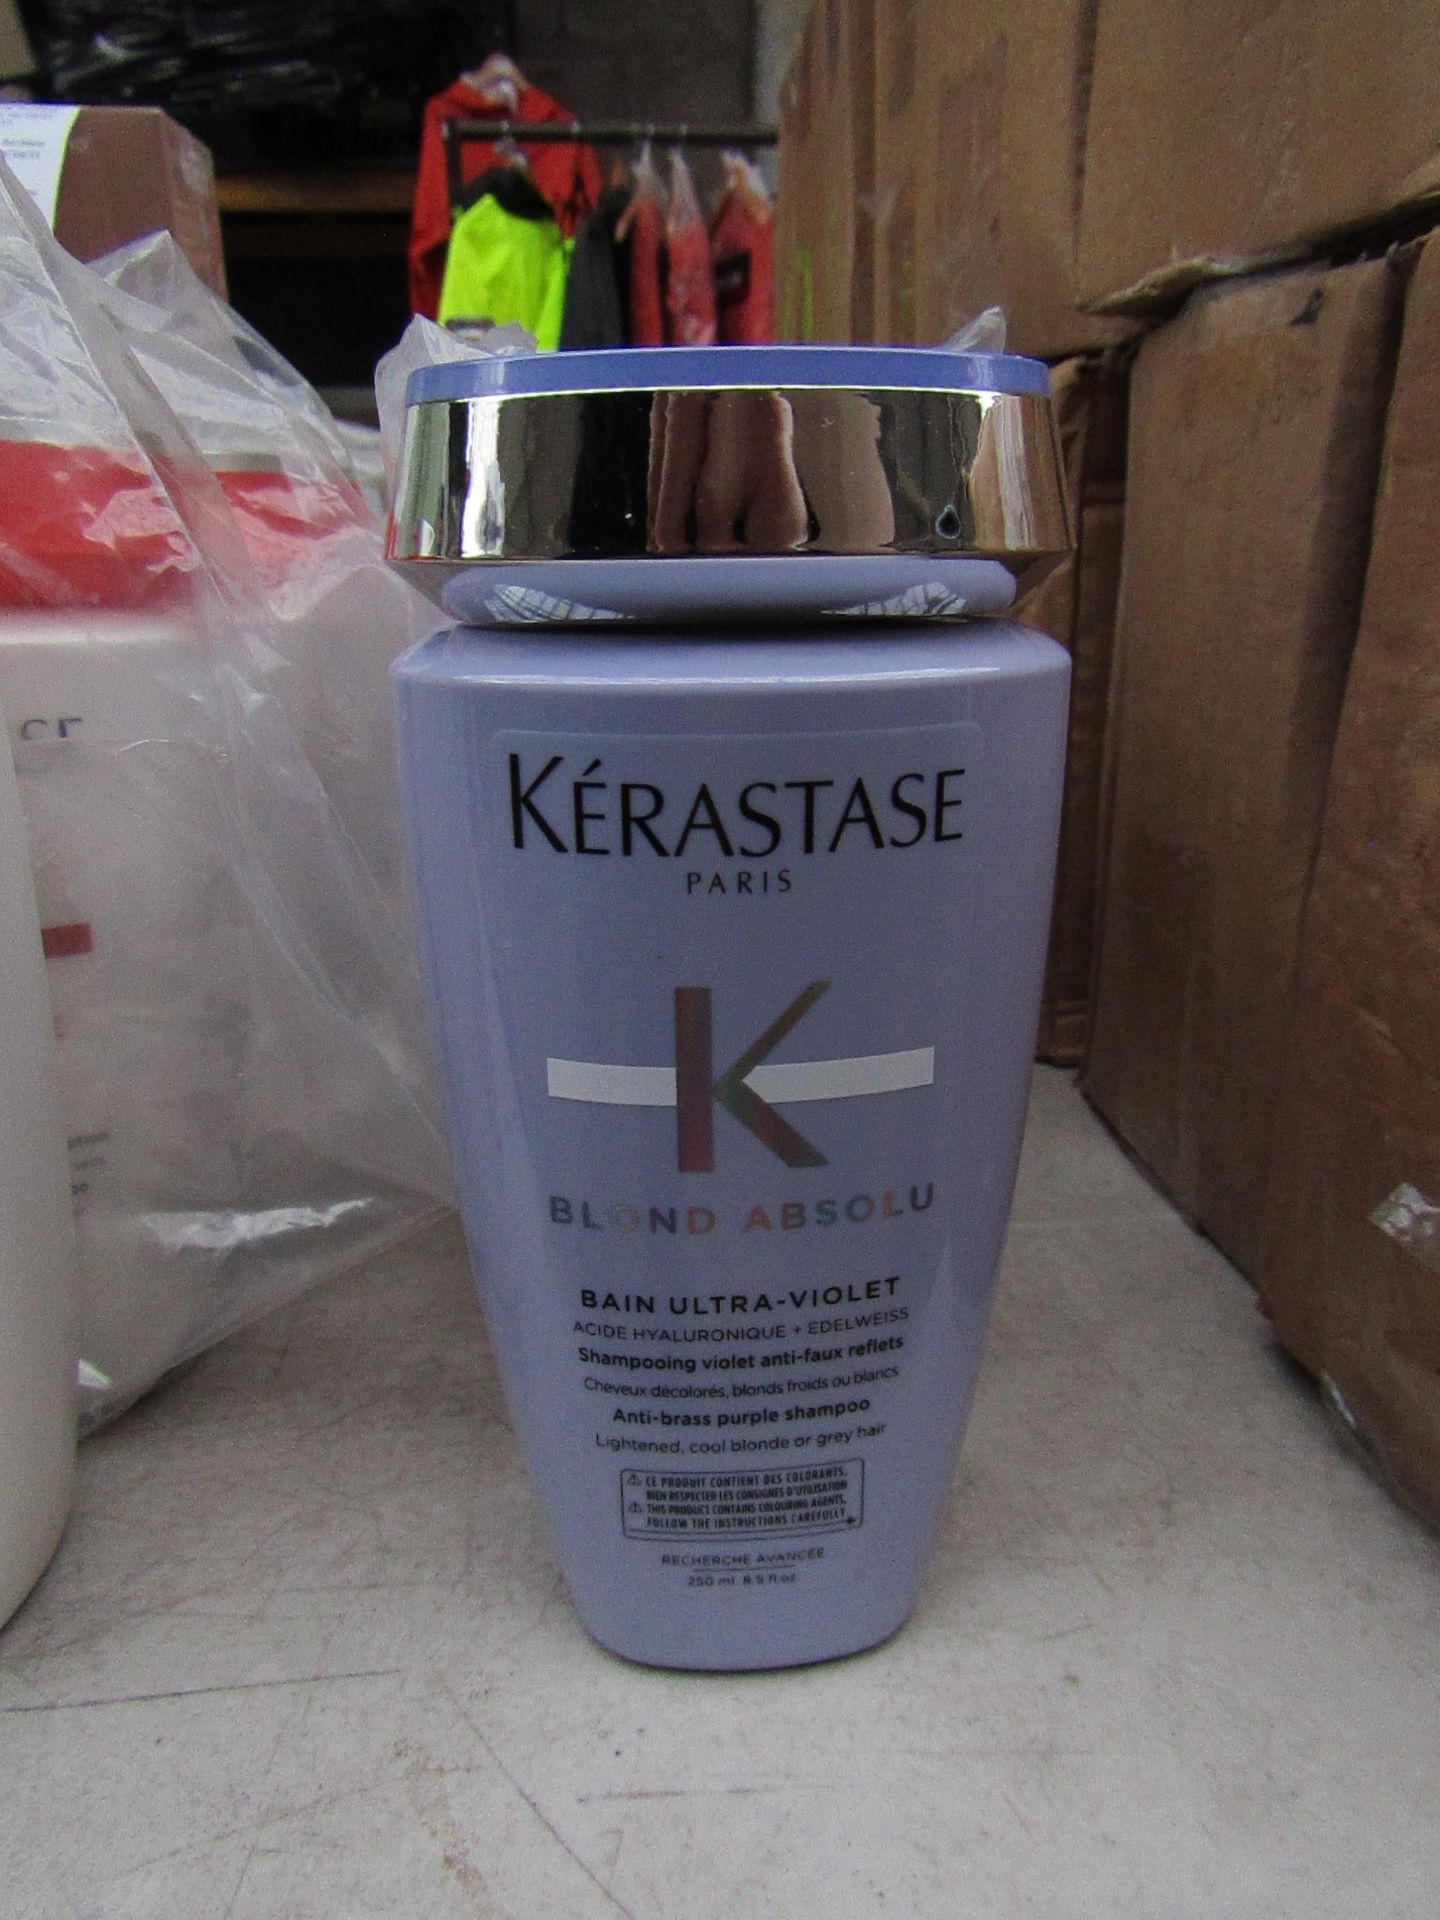 Keratase - Blond Absolu bain ultra-violet 250ml - new & packaged - RRP œ19